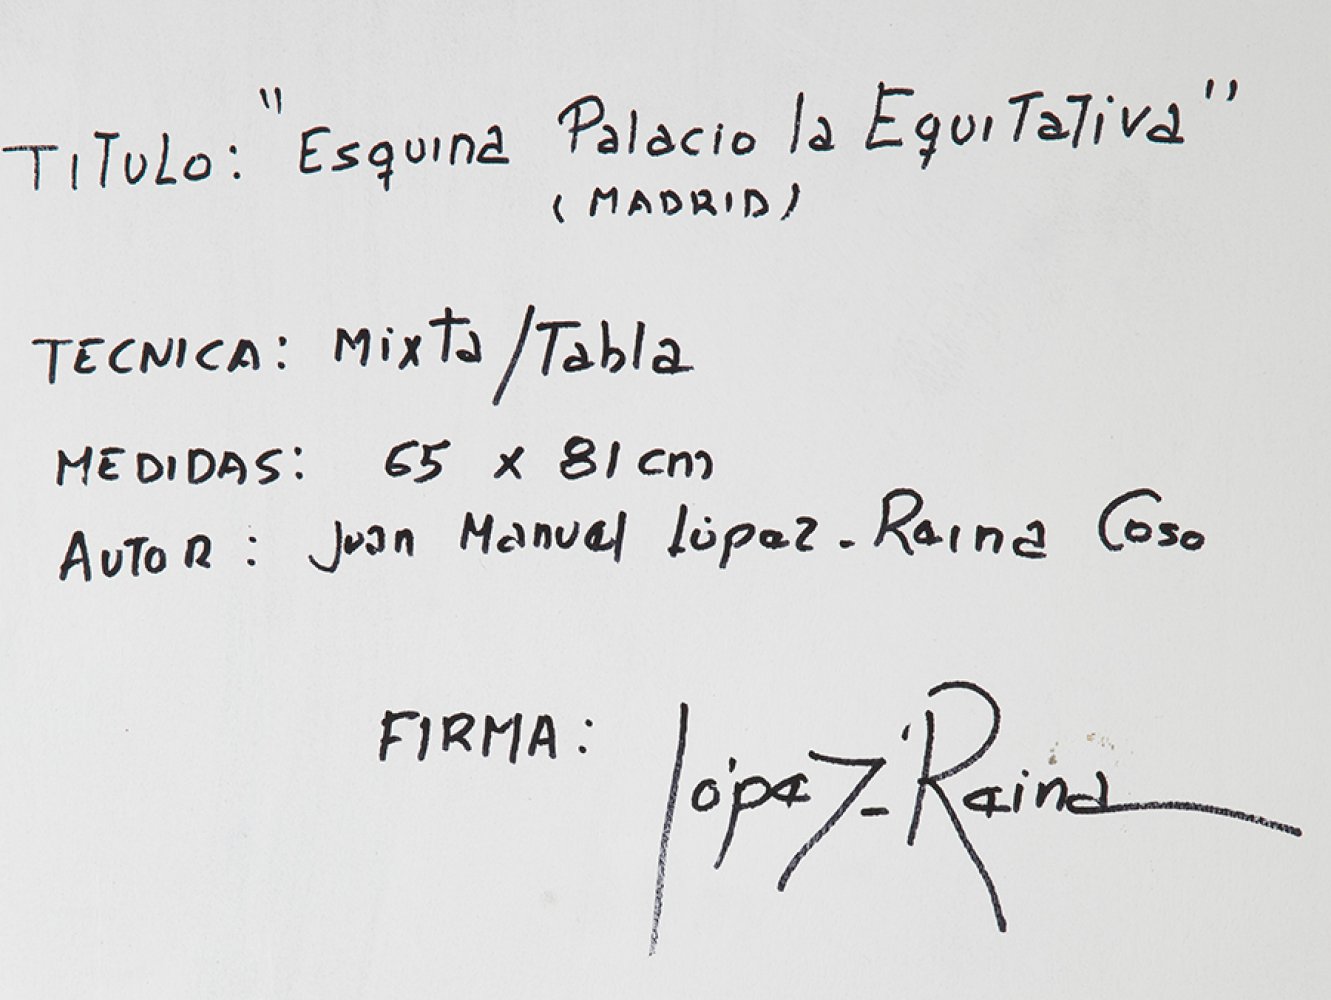 JUAN MANUEL LÓPEZ-REINA COSO (Cuenca, 1953)."Esquina palacio, la equitativa", 2021.Mixed media on - Image 3 of 3